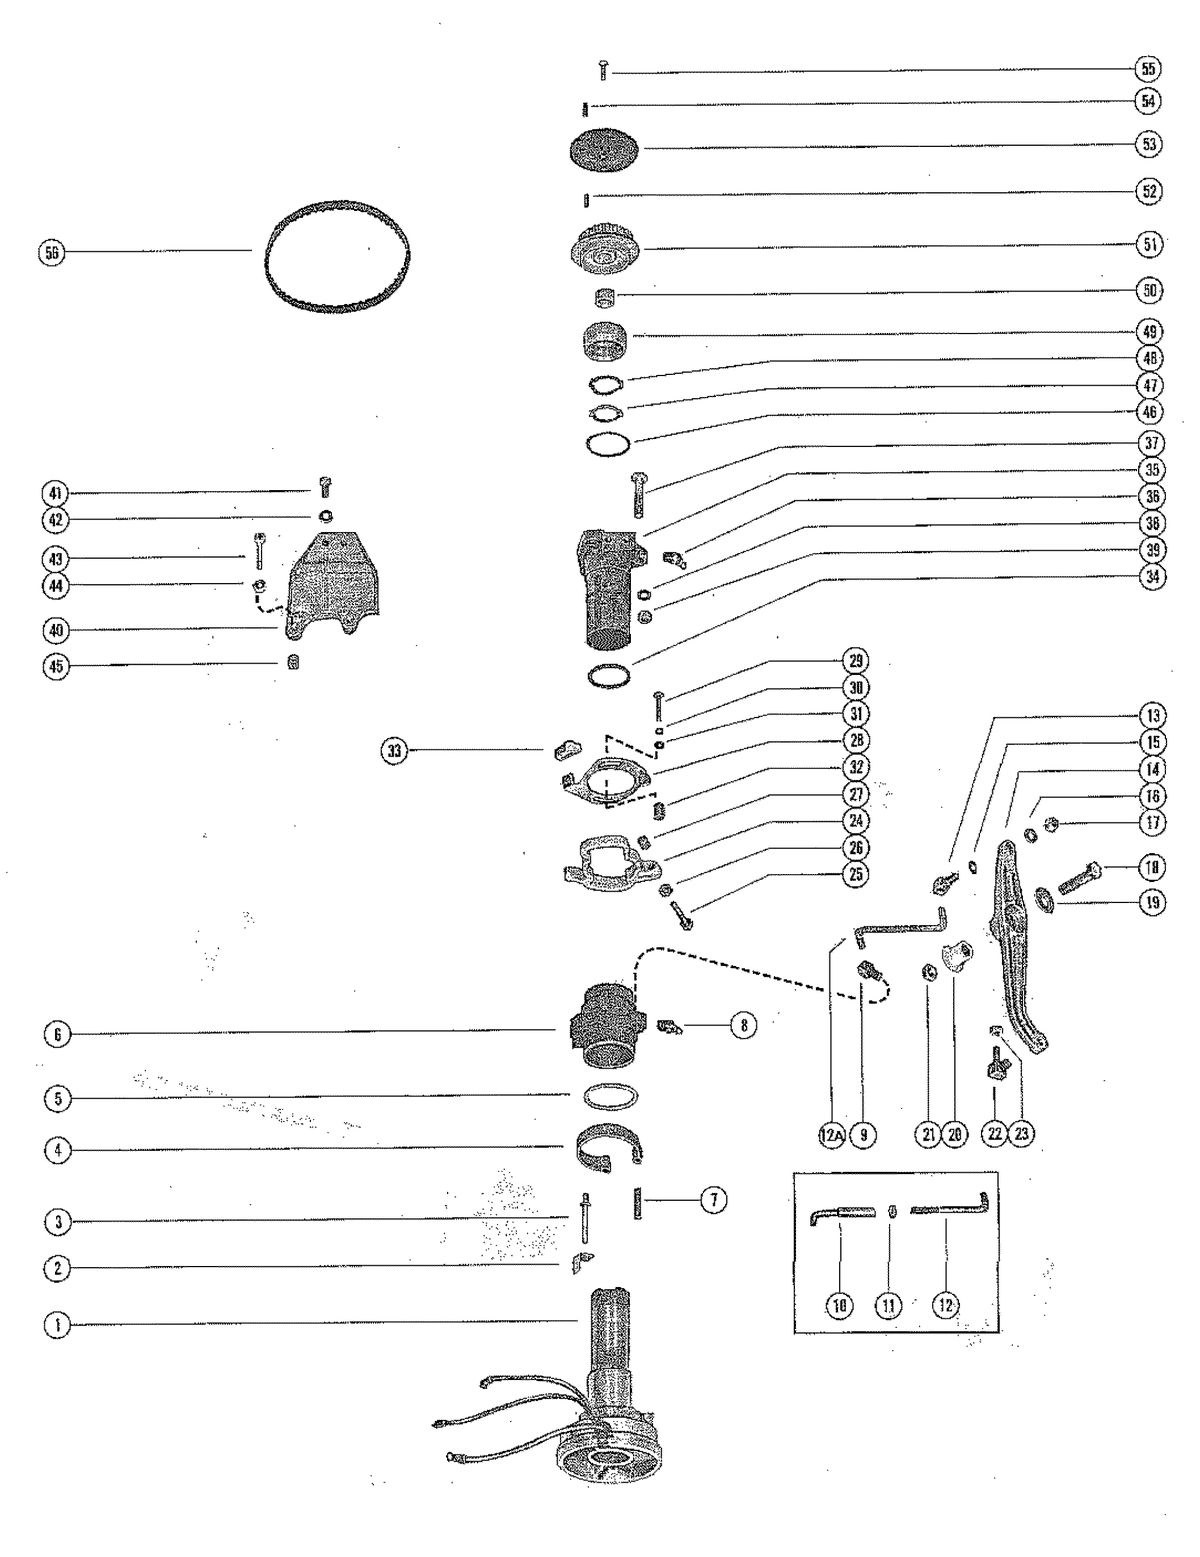 MERCURY MERC 850 (4 CYLINDER) DISTRIBUTOR ADAPTOR AND VERTICAL LINKAGE